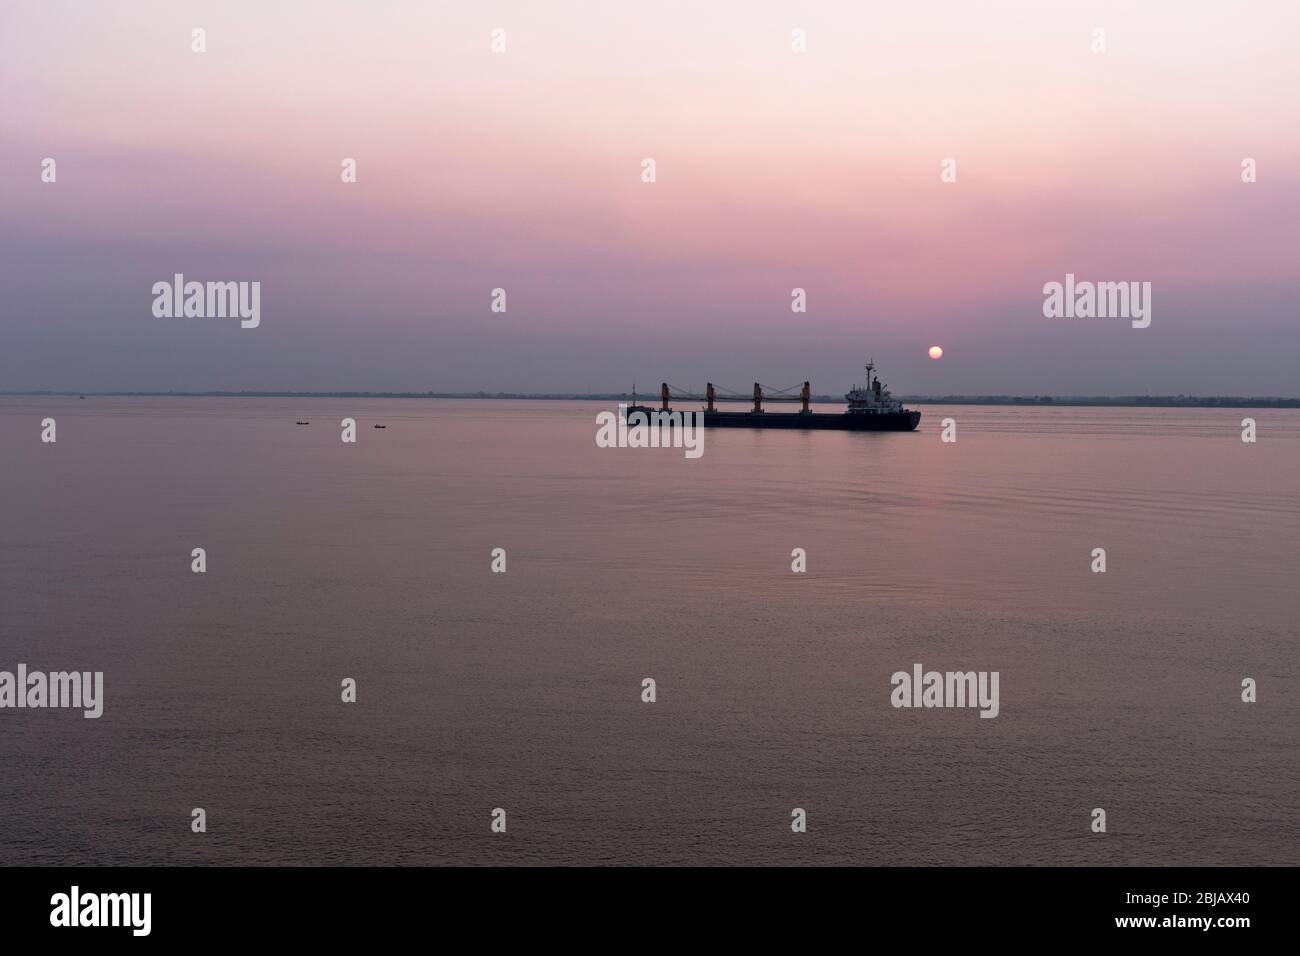 dh far East Asia YANGON RIVER MYANMAR Tramonto su nave mercantile marina nave da trasporto asiatica lontano est Foto Stock